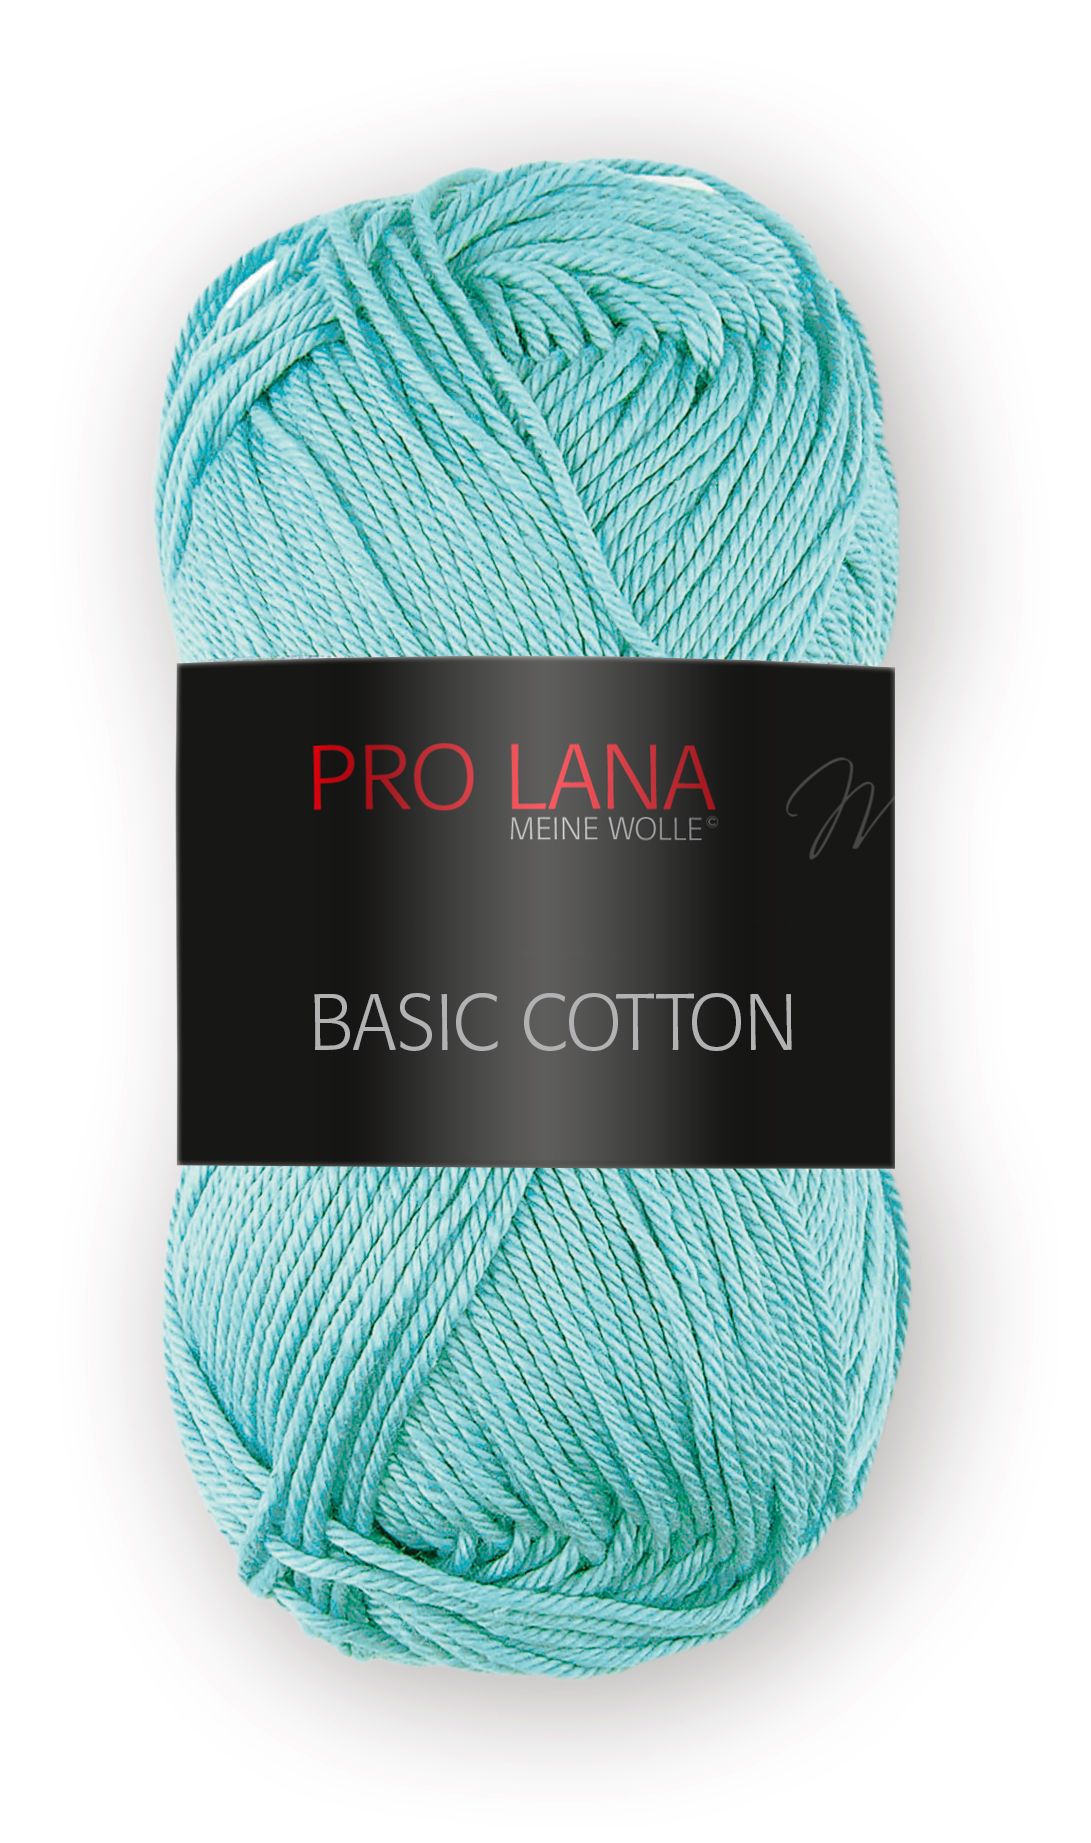 Pro Lana Basic Cotton 50g - Mint 65